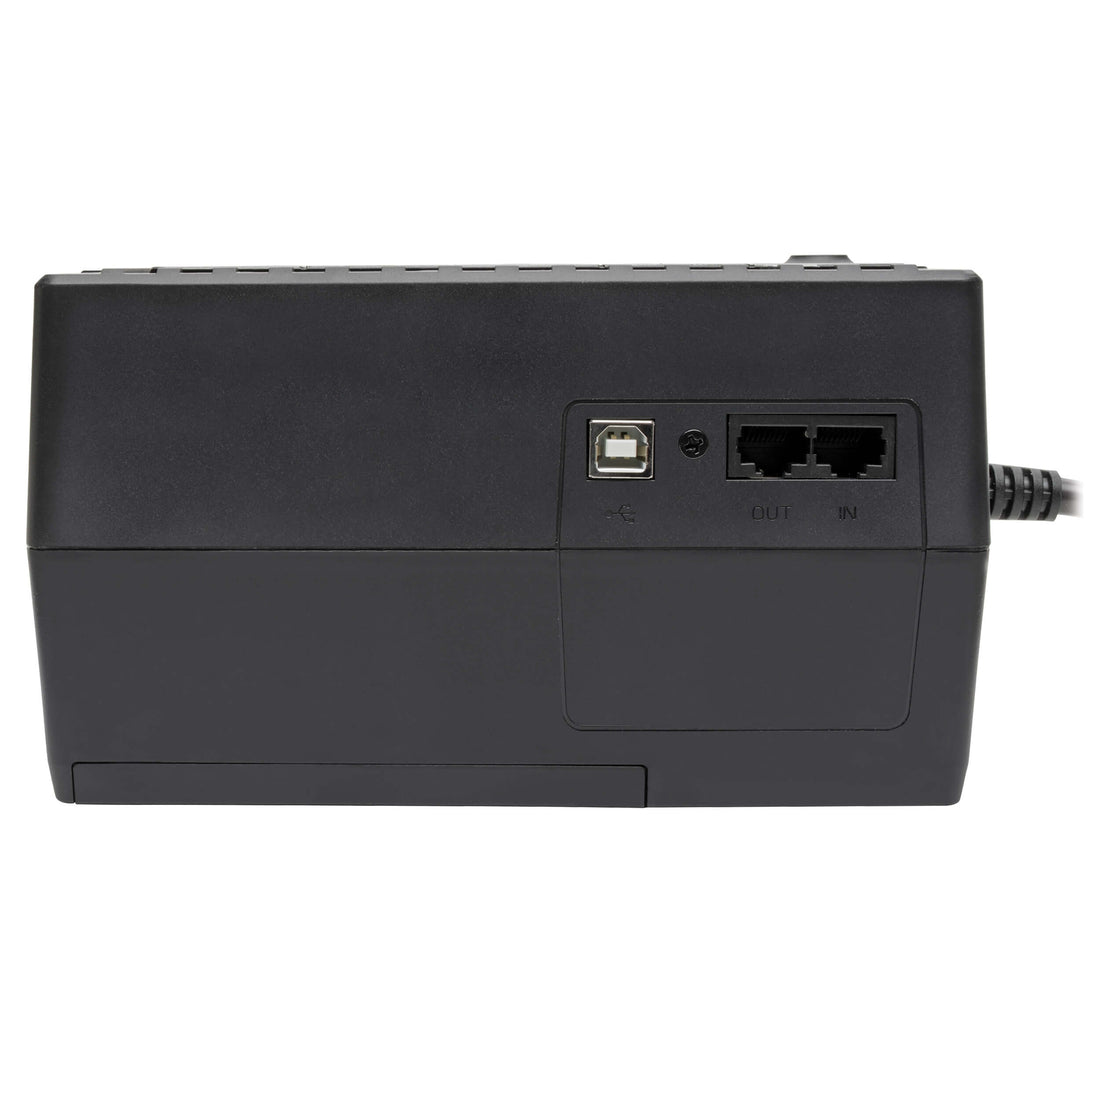 Eaton/Tripp Lite Standby UPS 550VA/300W 120V 50/60Hz Desktop/Wall Mount (INTERNET550U)